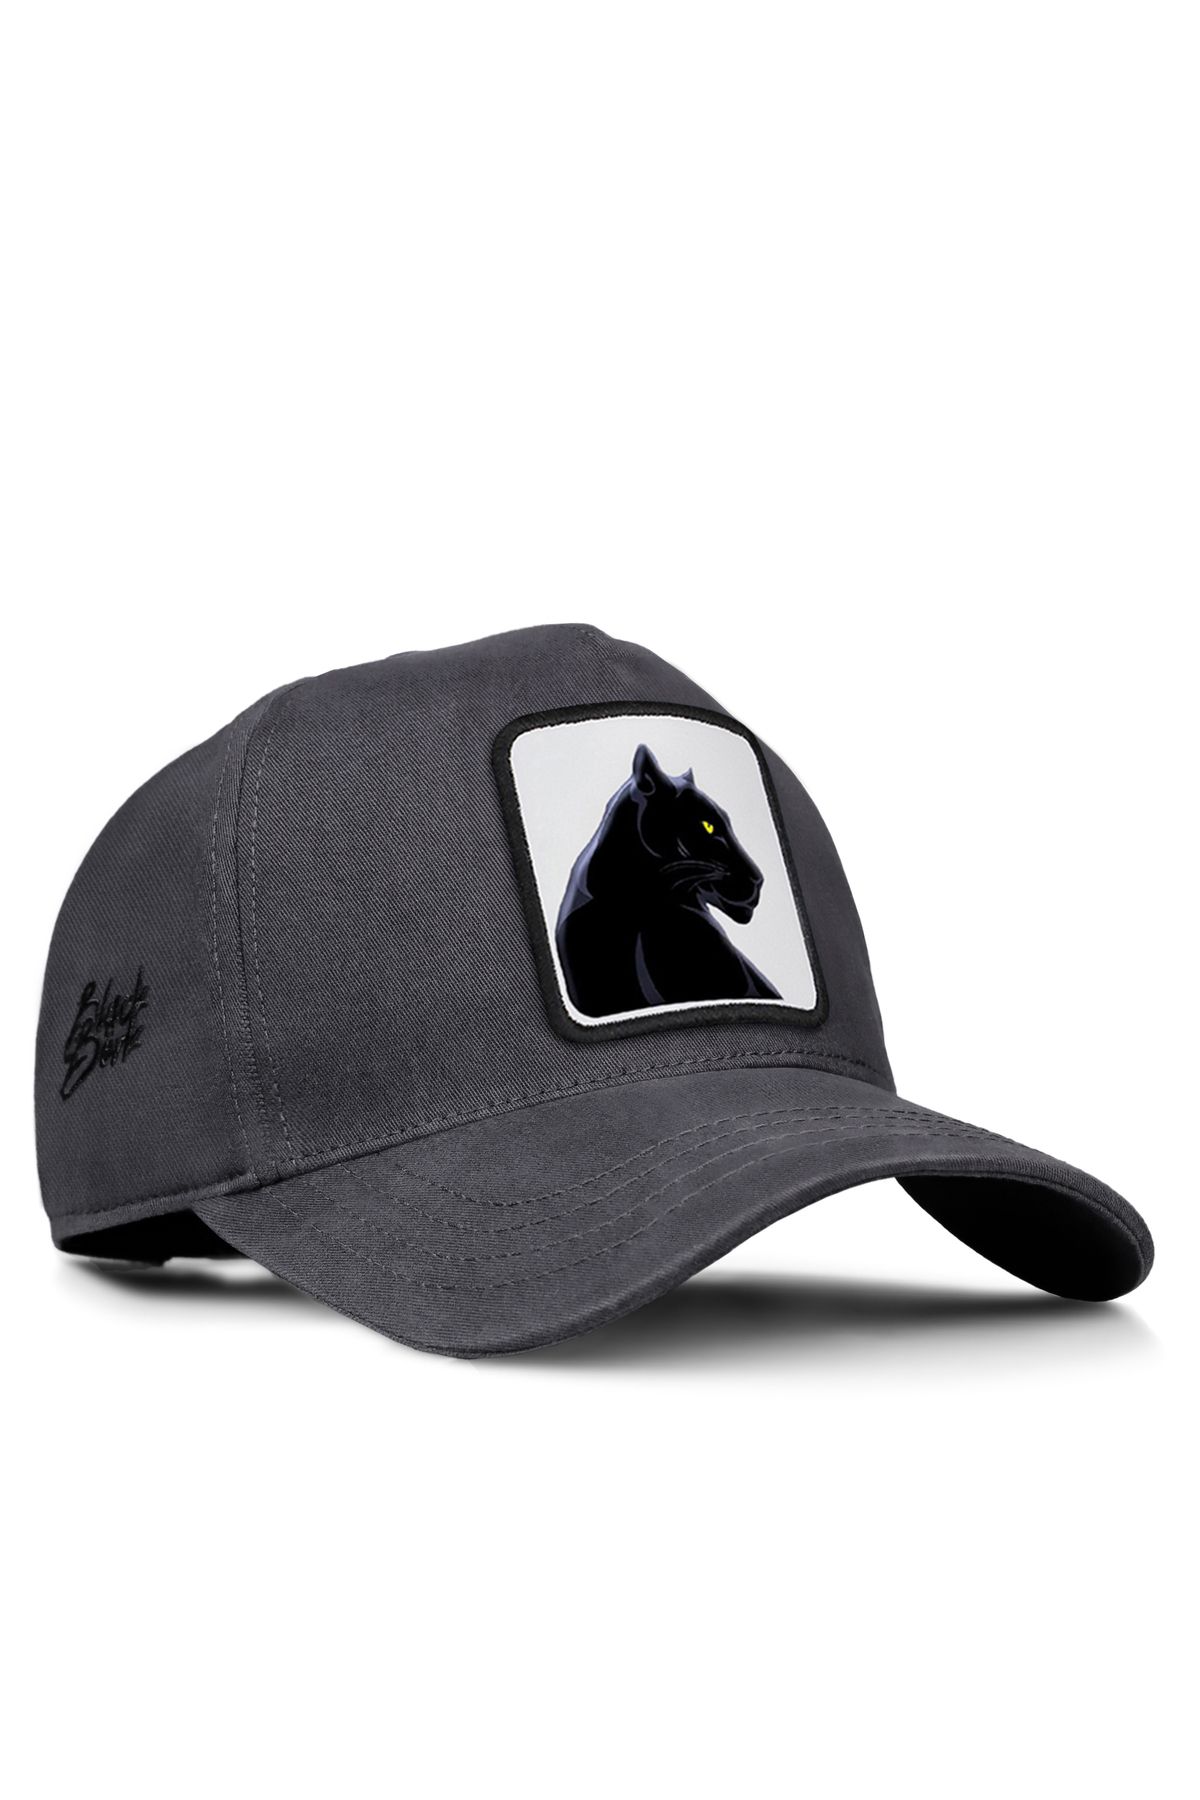 BlackBörk V1 Baseball Panter - 1bs Kod Logolu Unisex Antrasit Şapka (CAP)